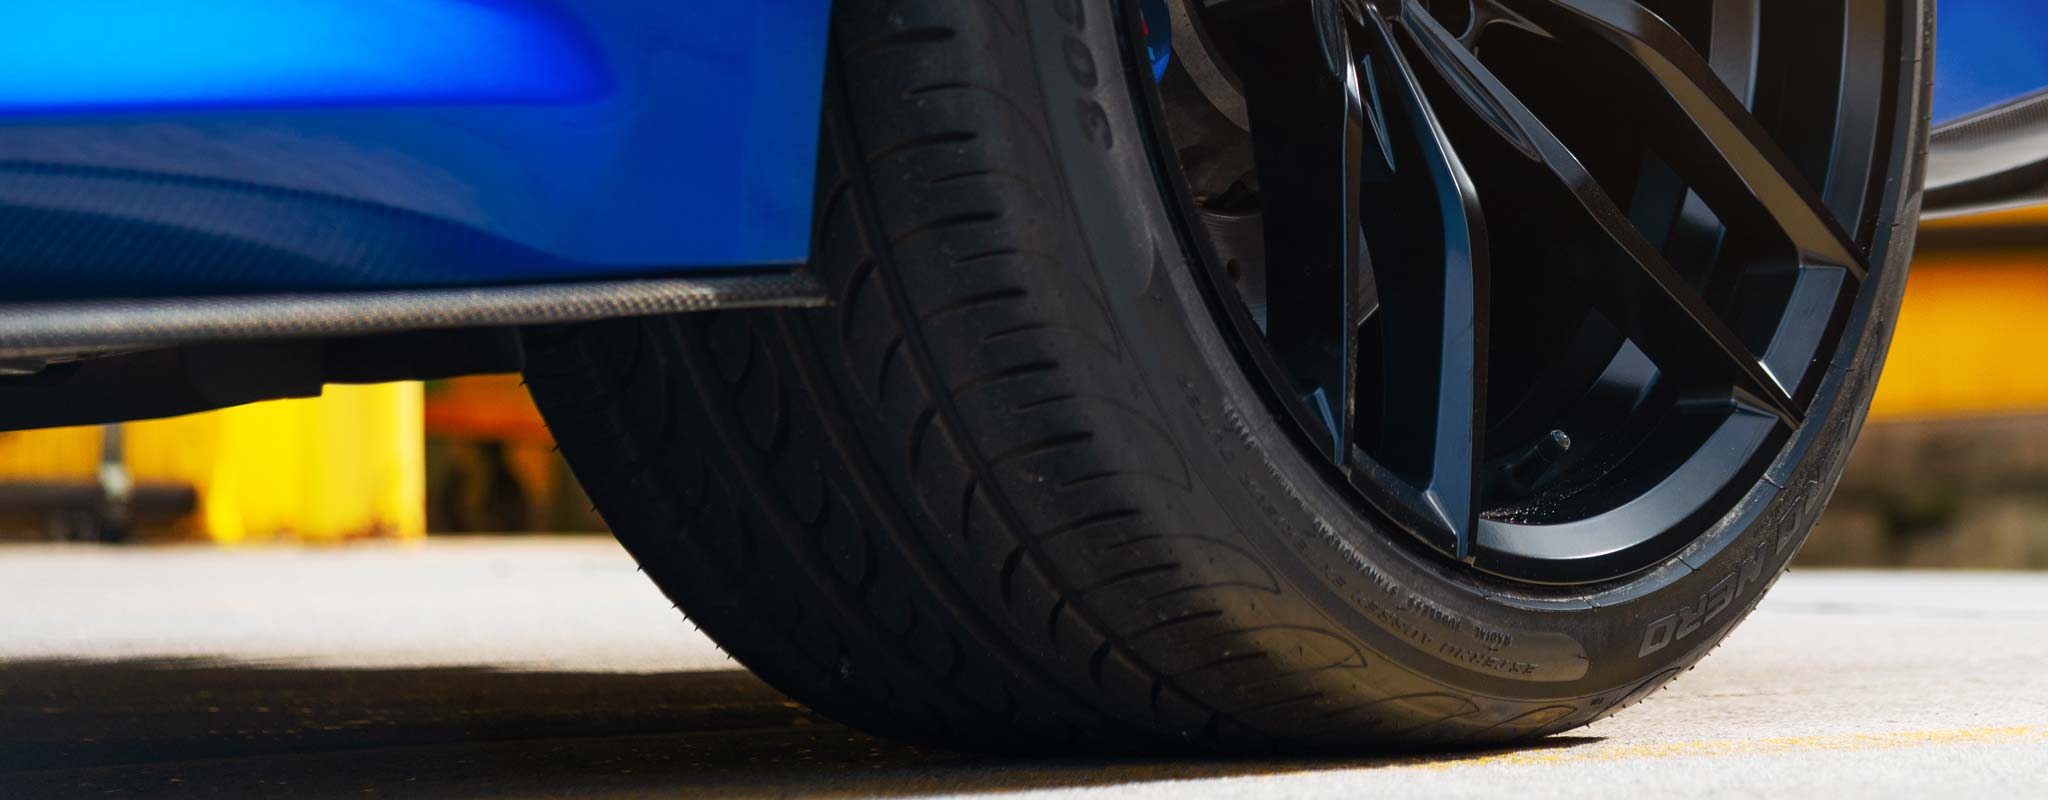 Pirelli run-flat tire on a Niche wheel.